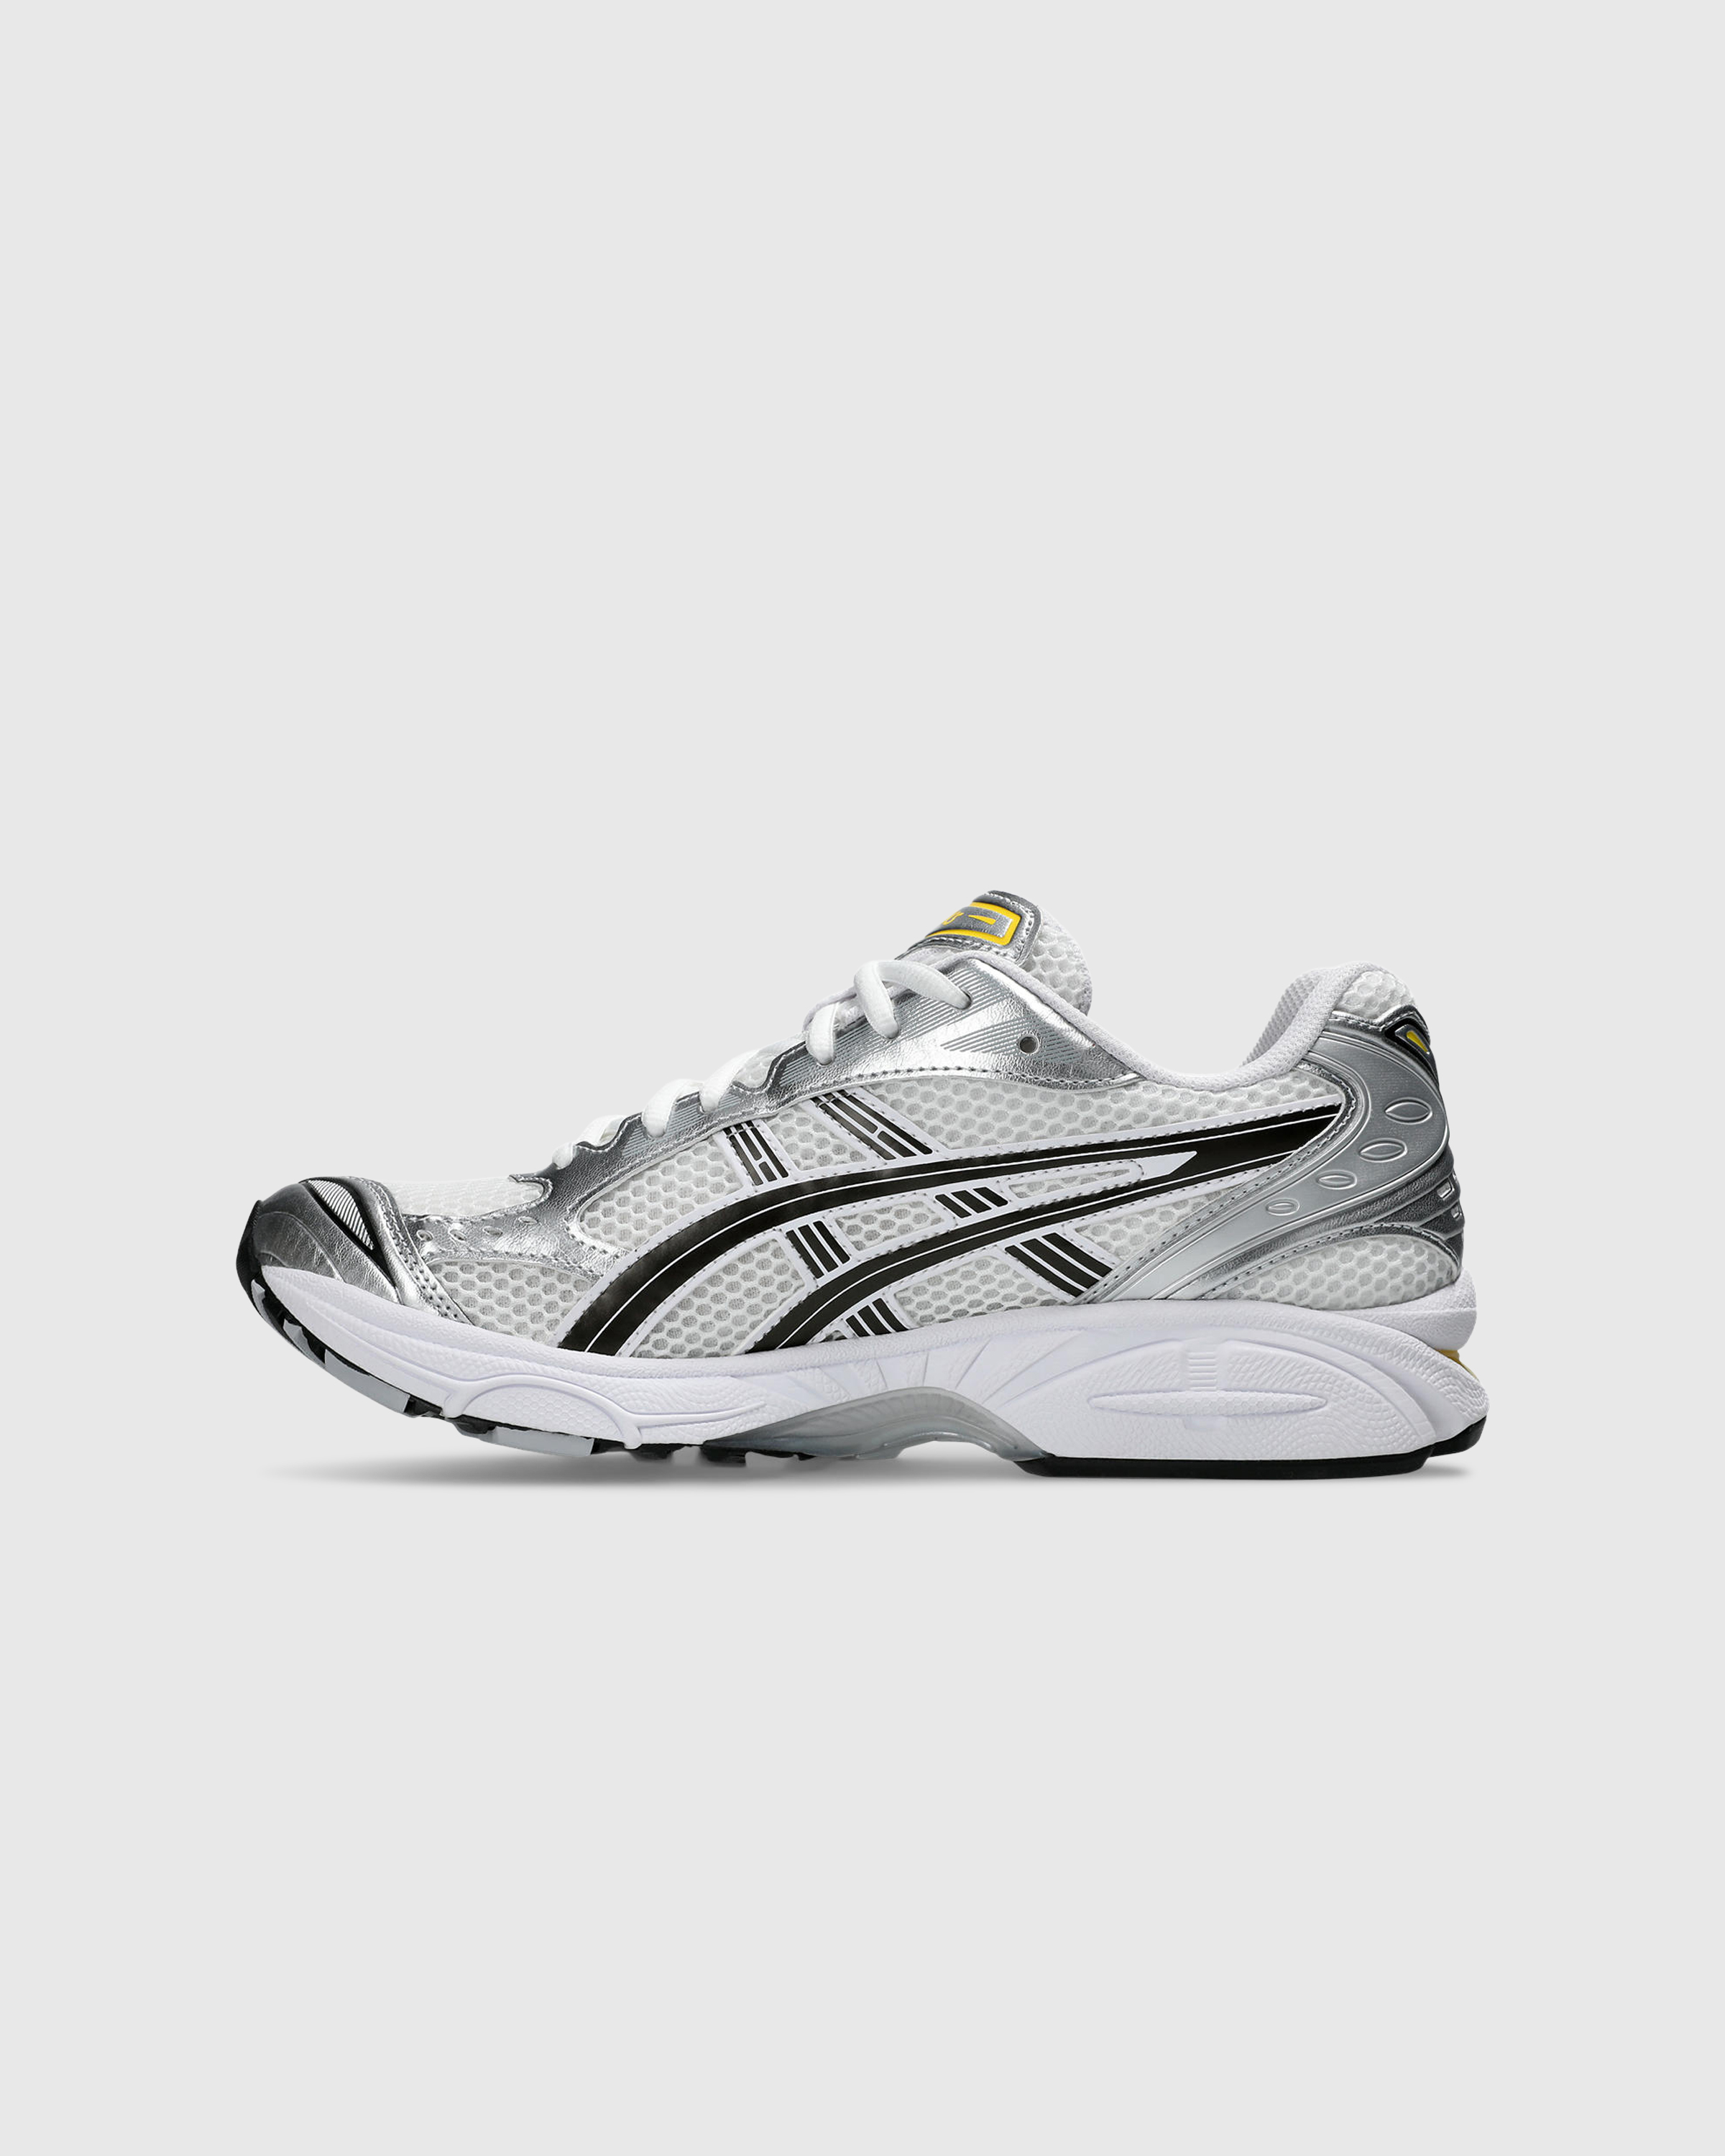 asics – GEL-KAYANO 14 White/Tai-Chi Yellow - Low Top Sneakers - Silver - Image 2